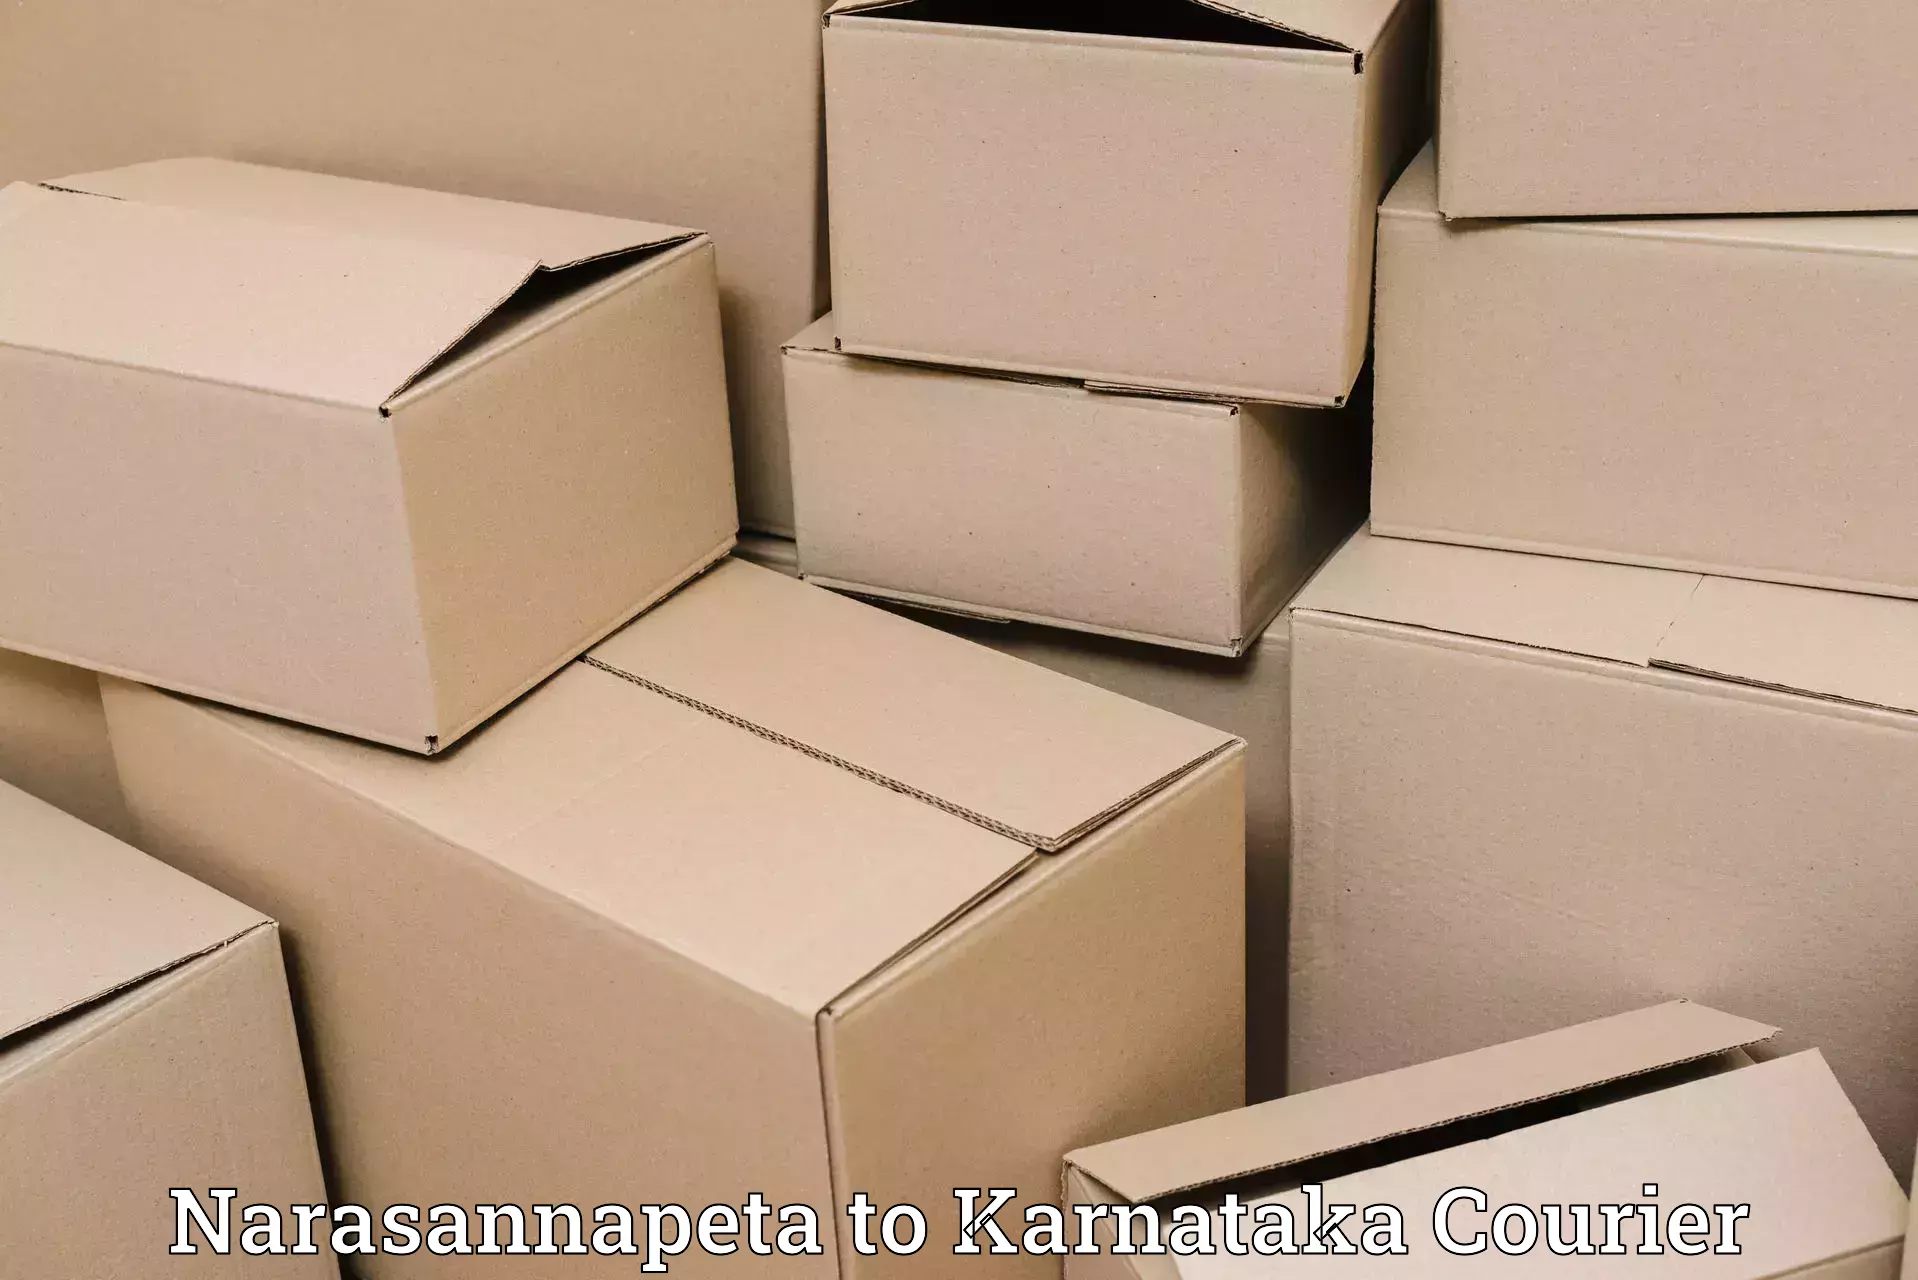 Global logistics network Narasannapeta to Kadur